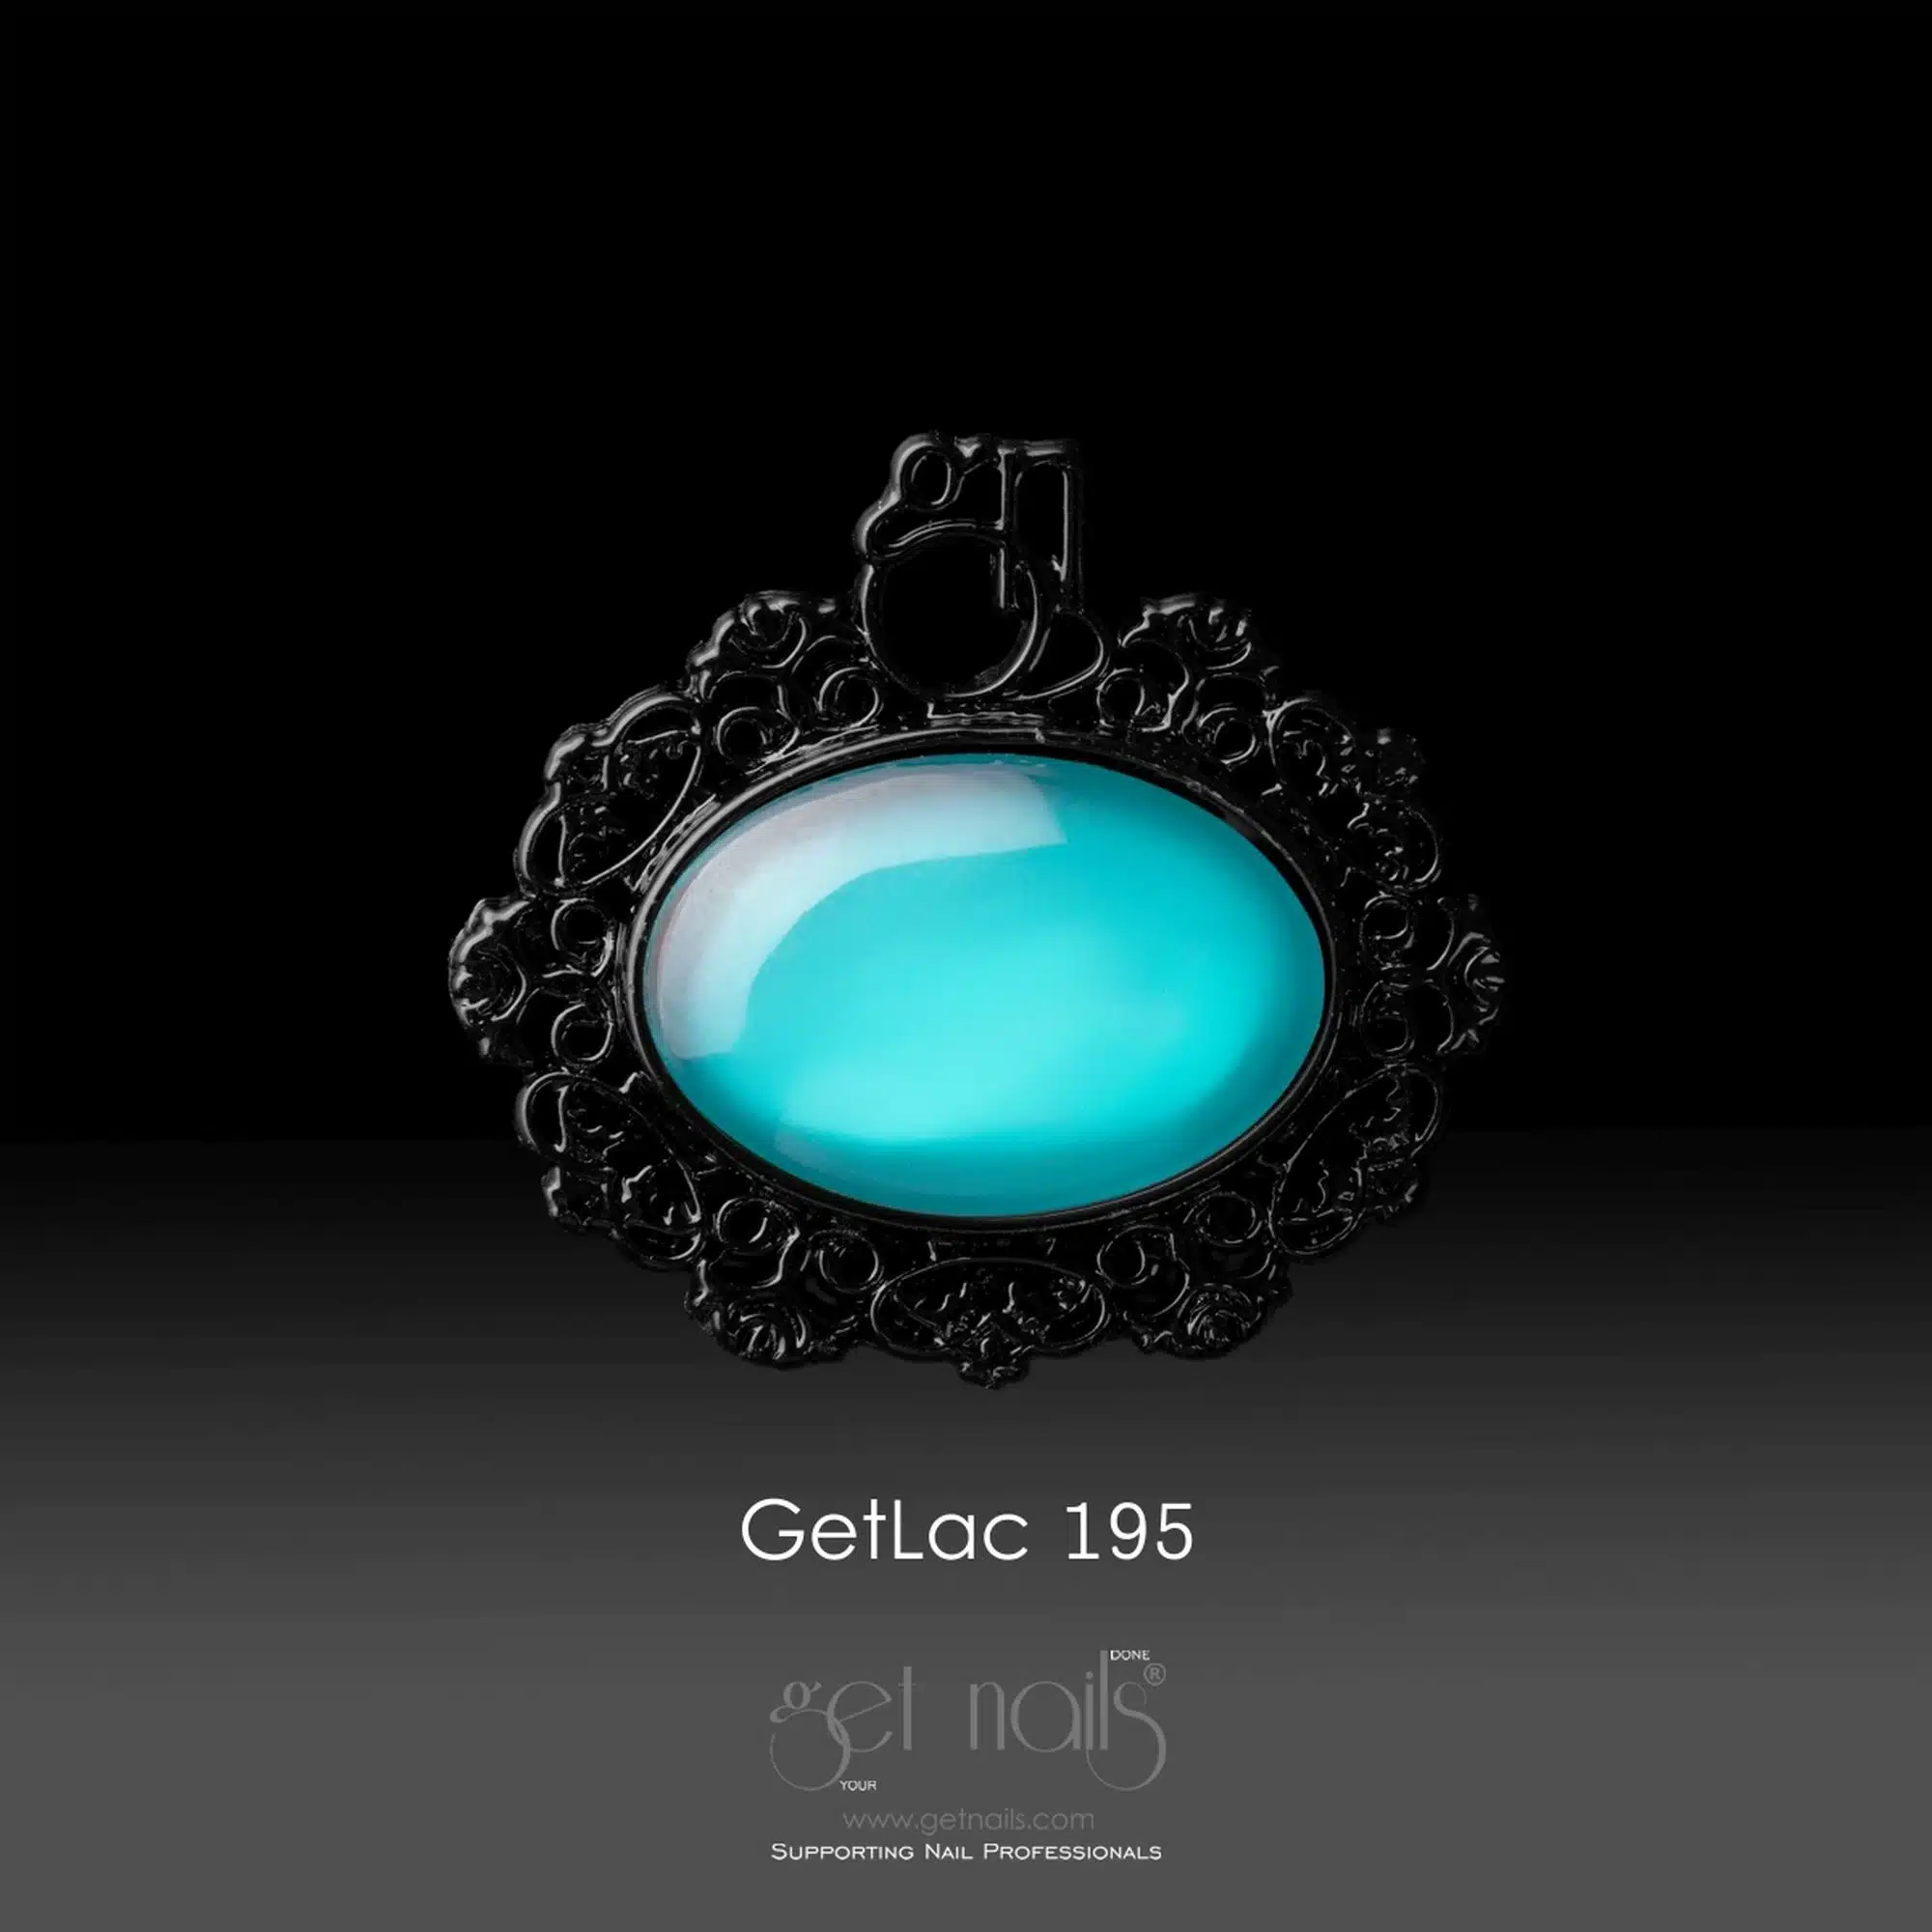 Get Nails Austria - GetLac 195 Blue Curacao 15g